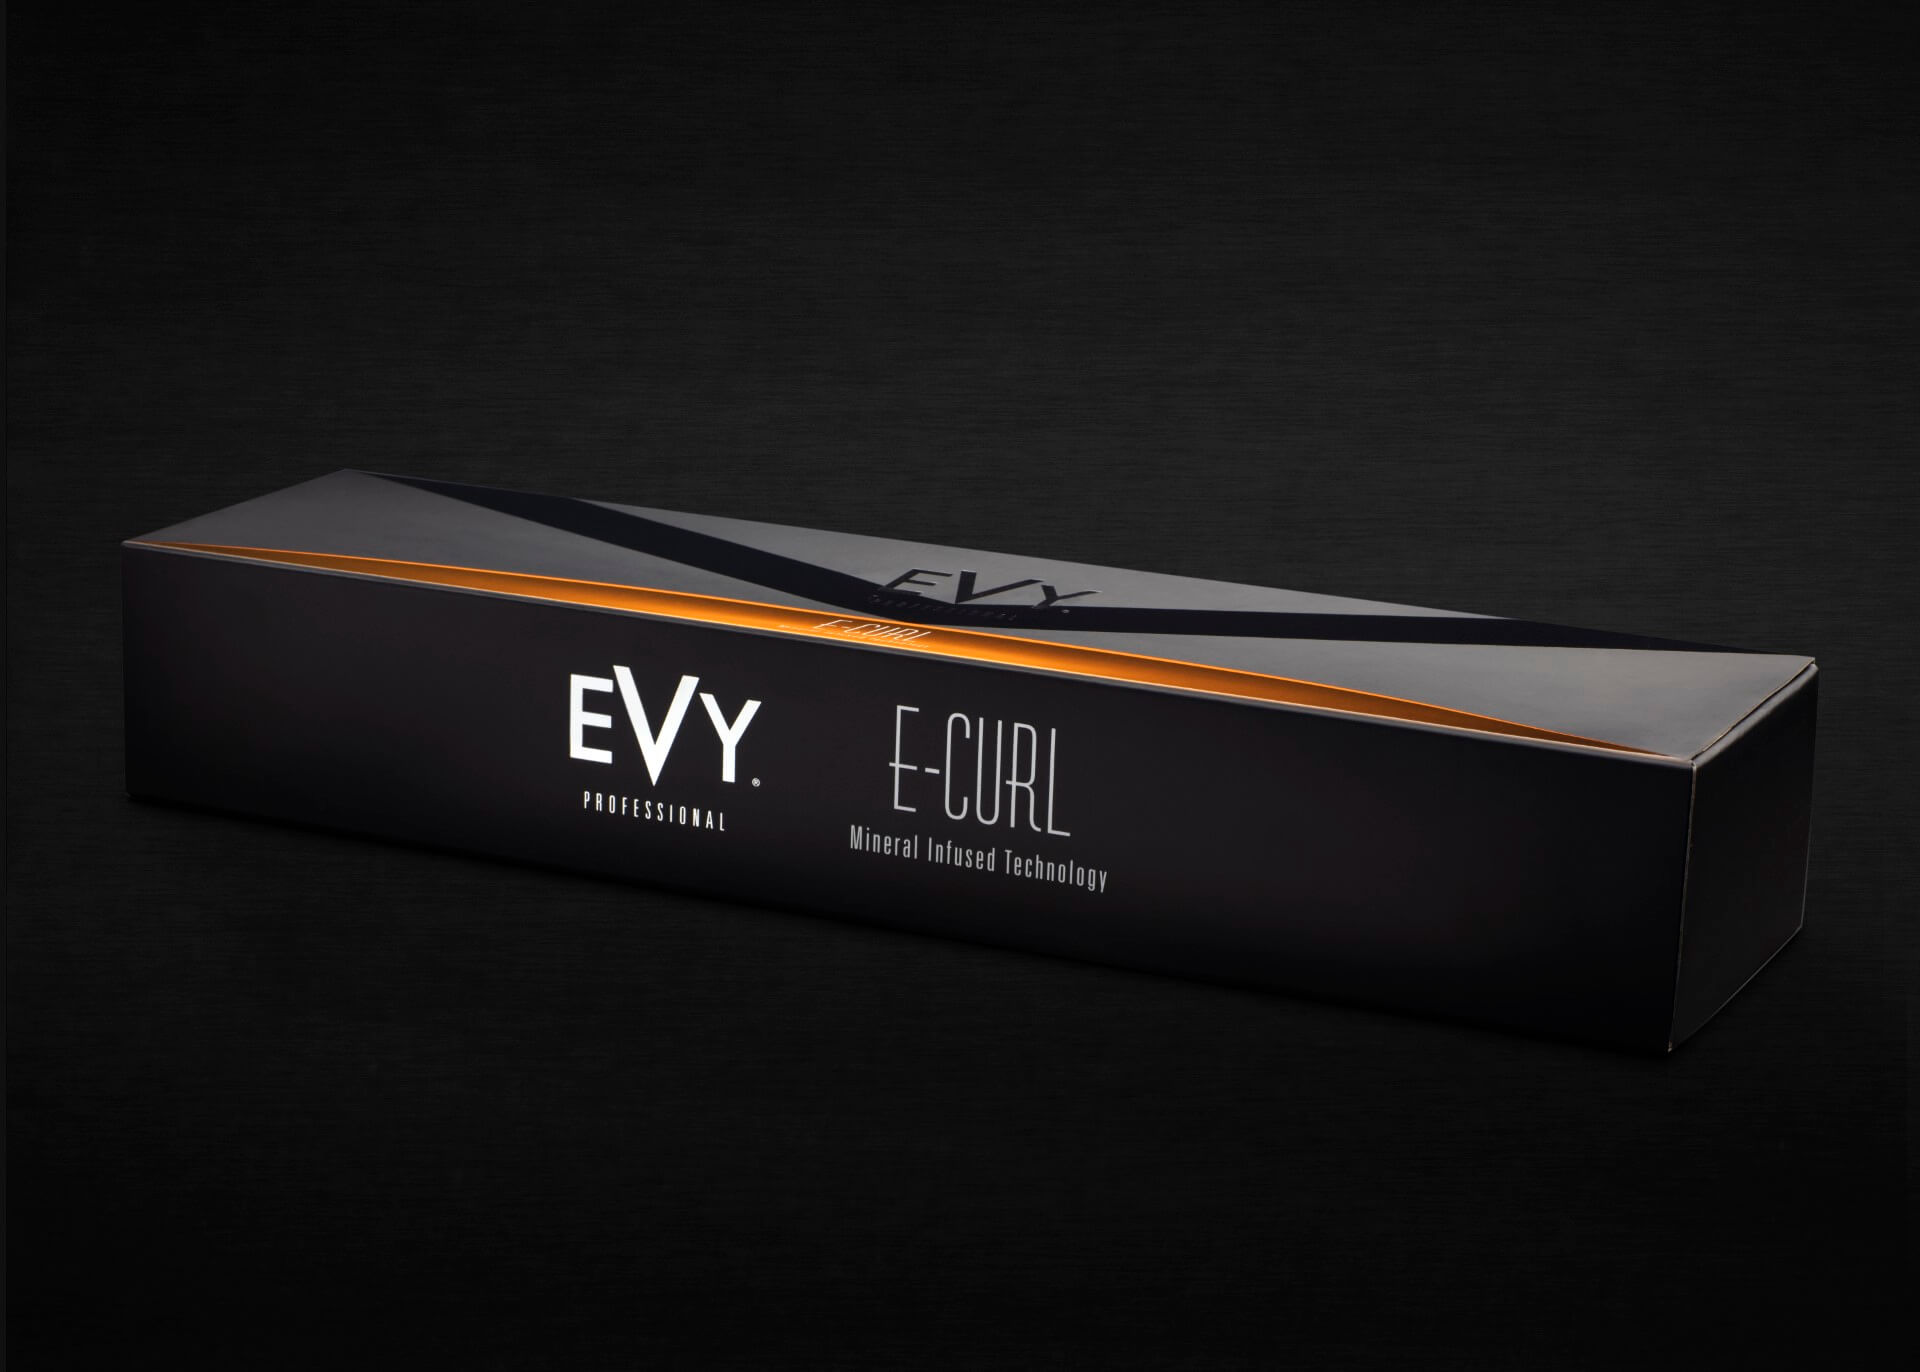 EVY PROFESSIONAL E-CURL 2